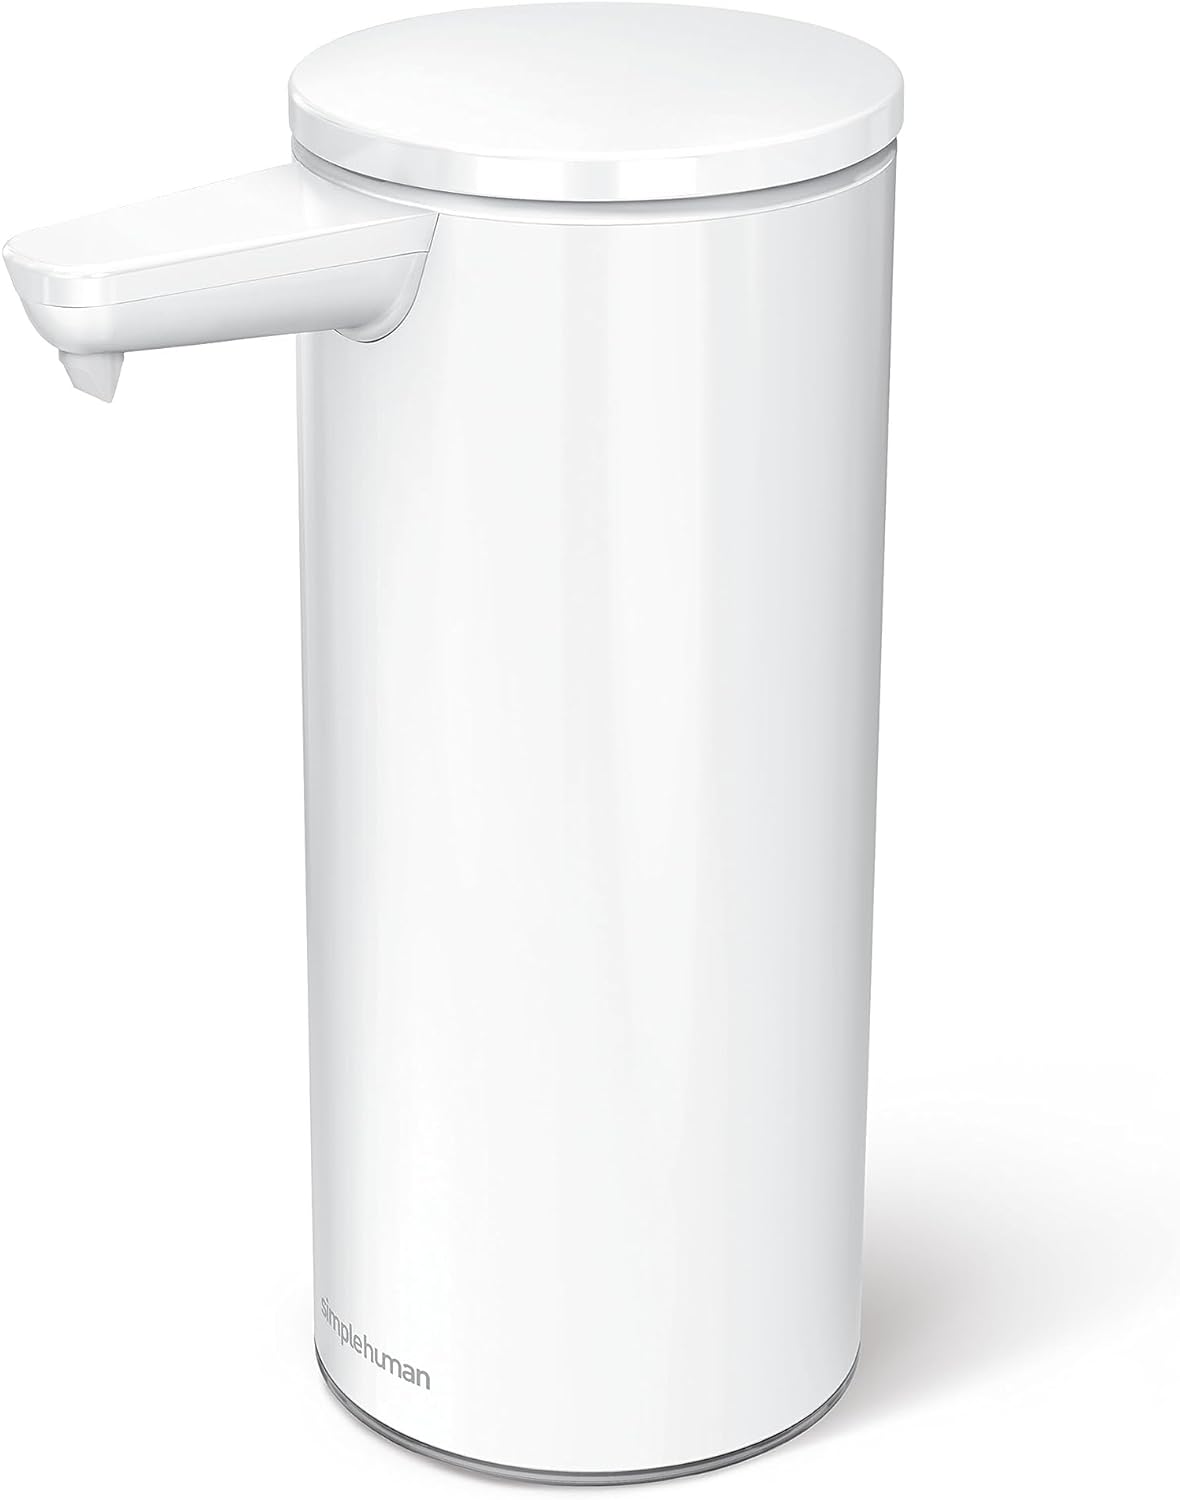 simplehuman 9 oz. Touch-Free Sensor Liquid Soap Pump Dispenser, White Stainless Steel